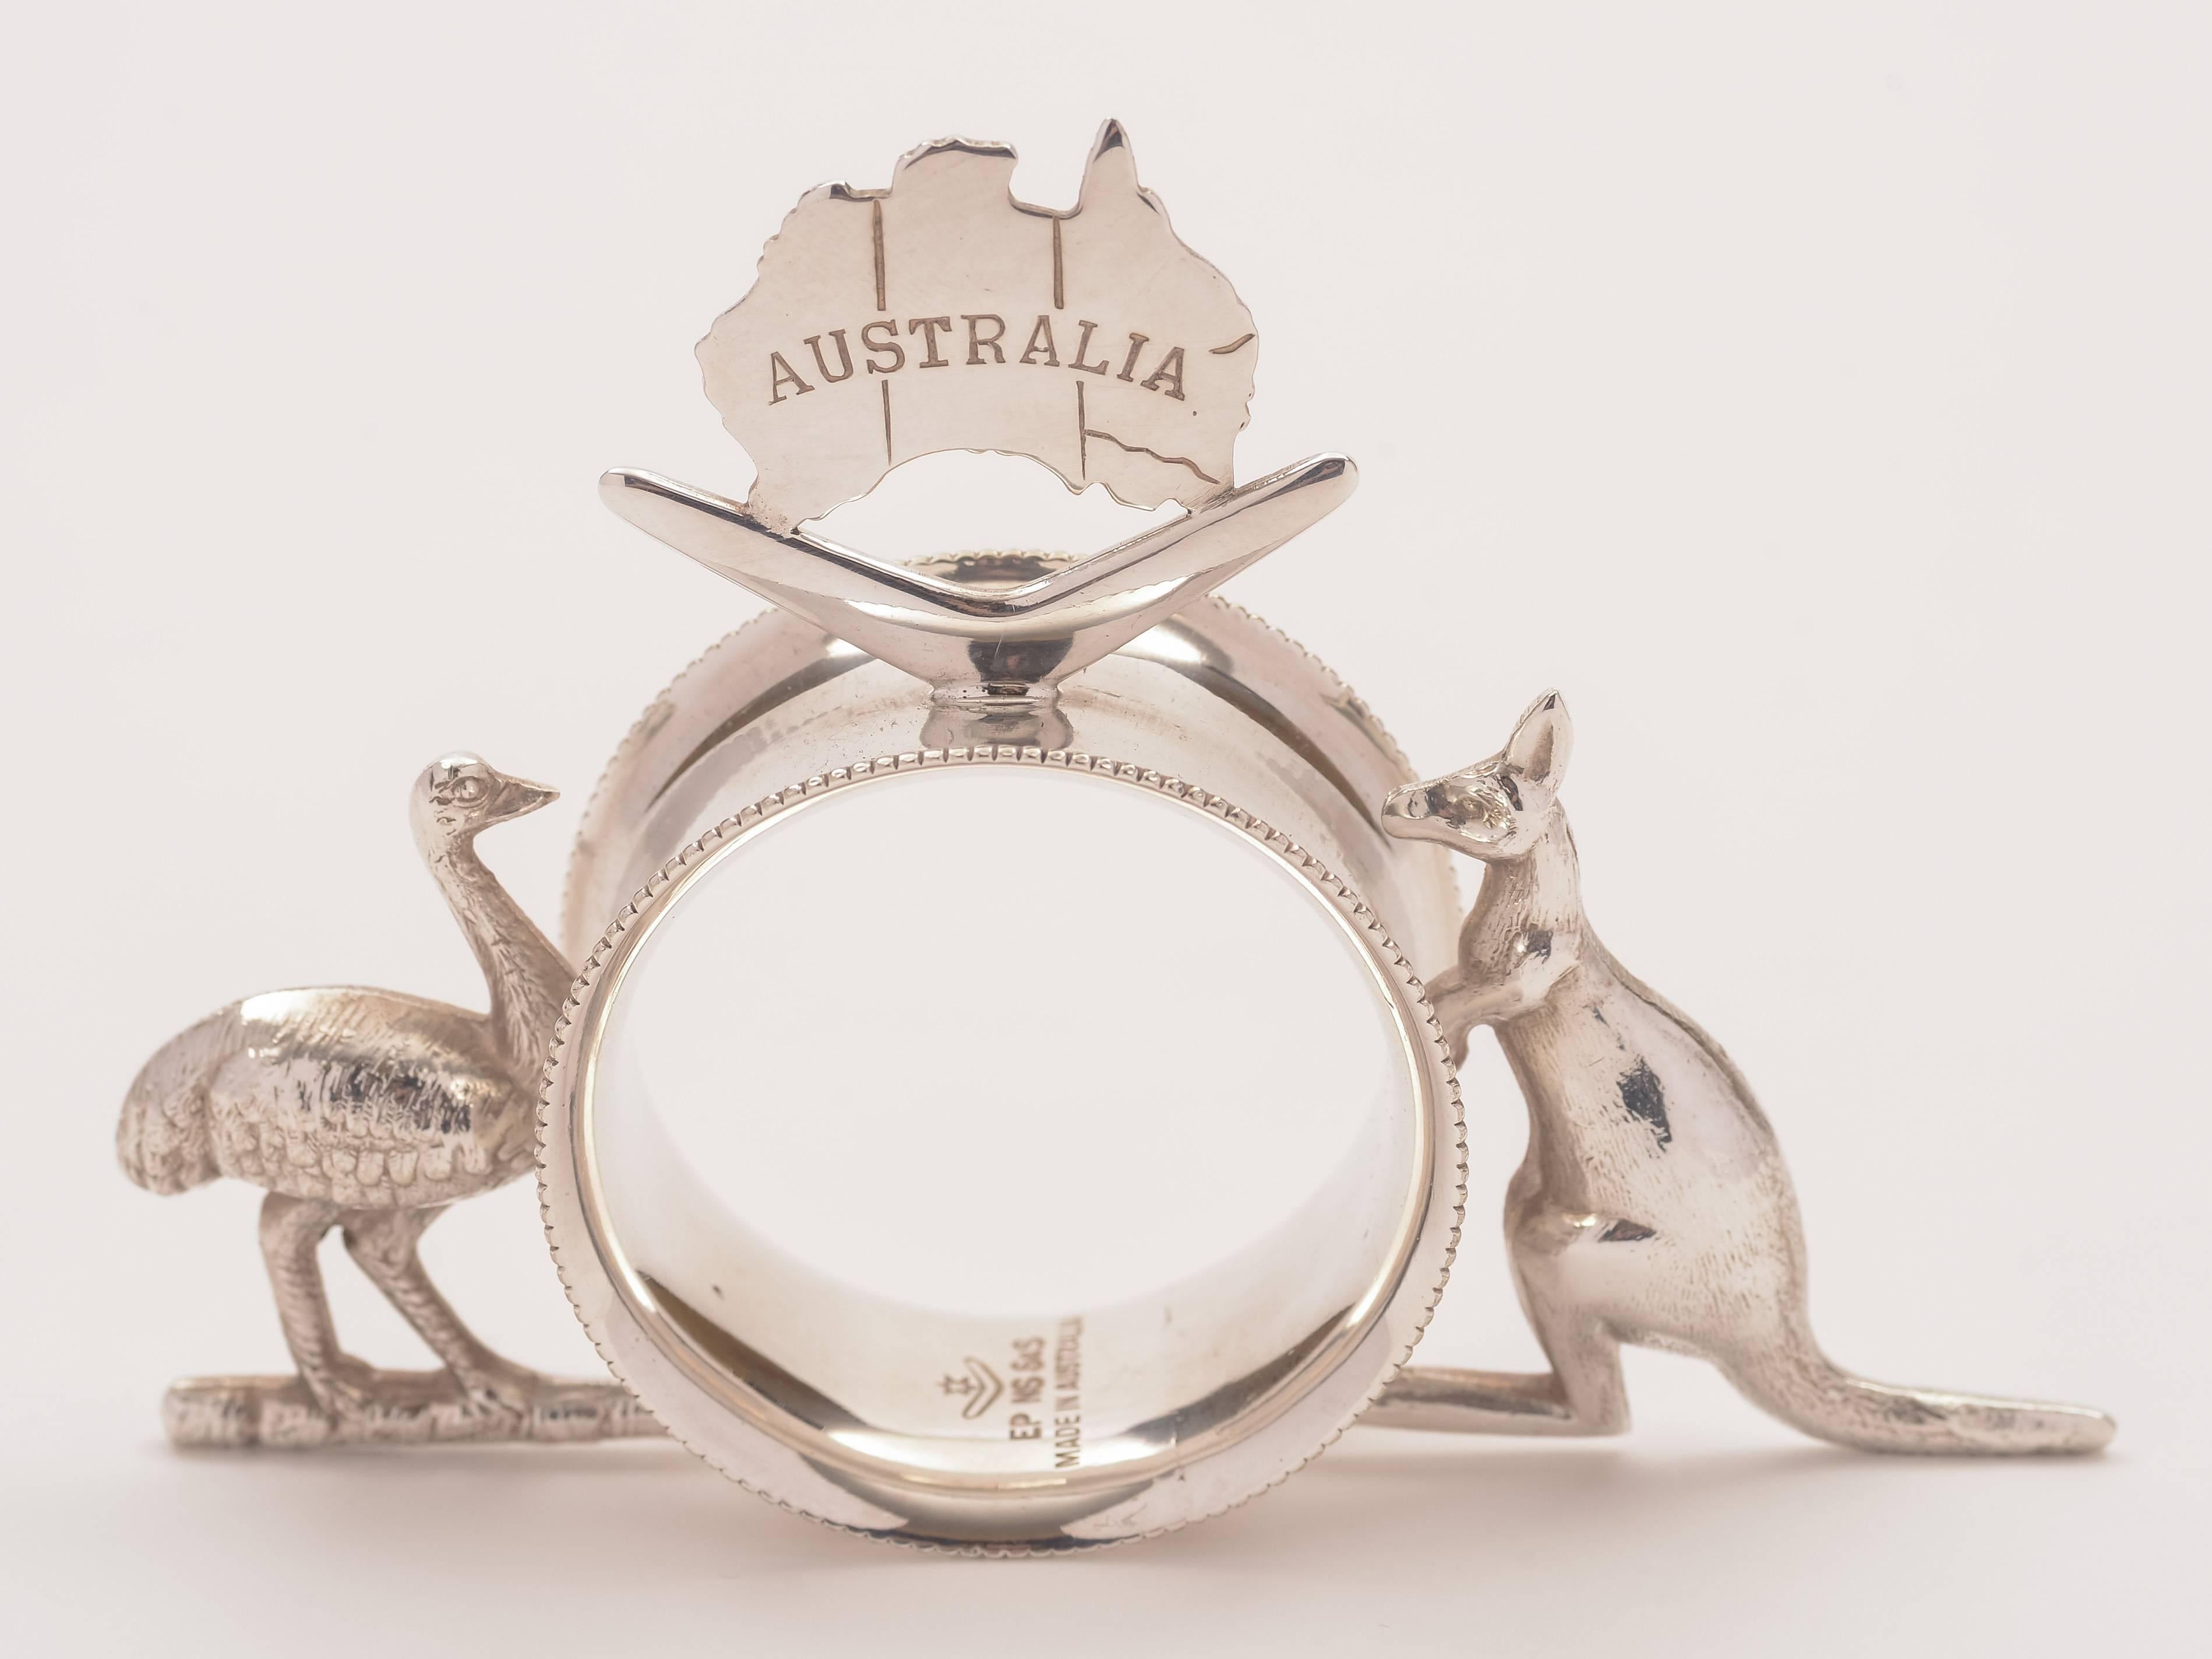 Early 20th Century 20th Century Australian Silver Plated Novelty Napkin Ring, circa 1910